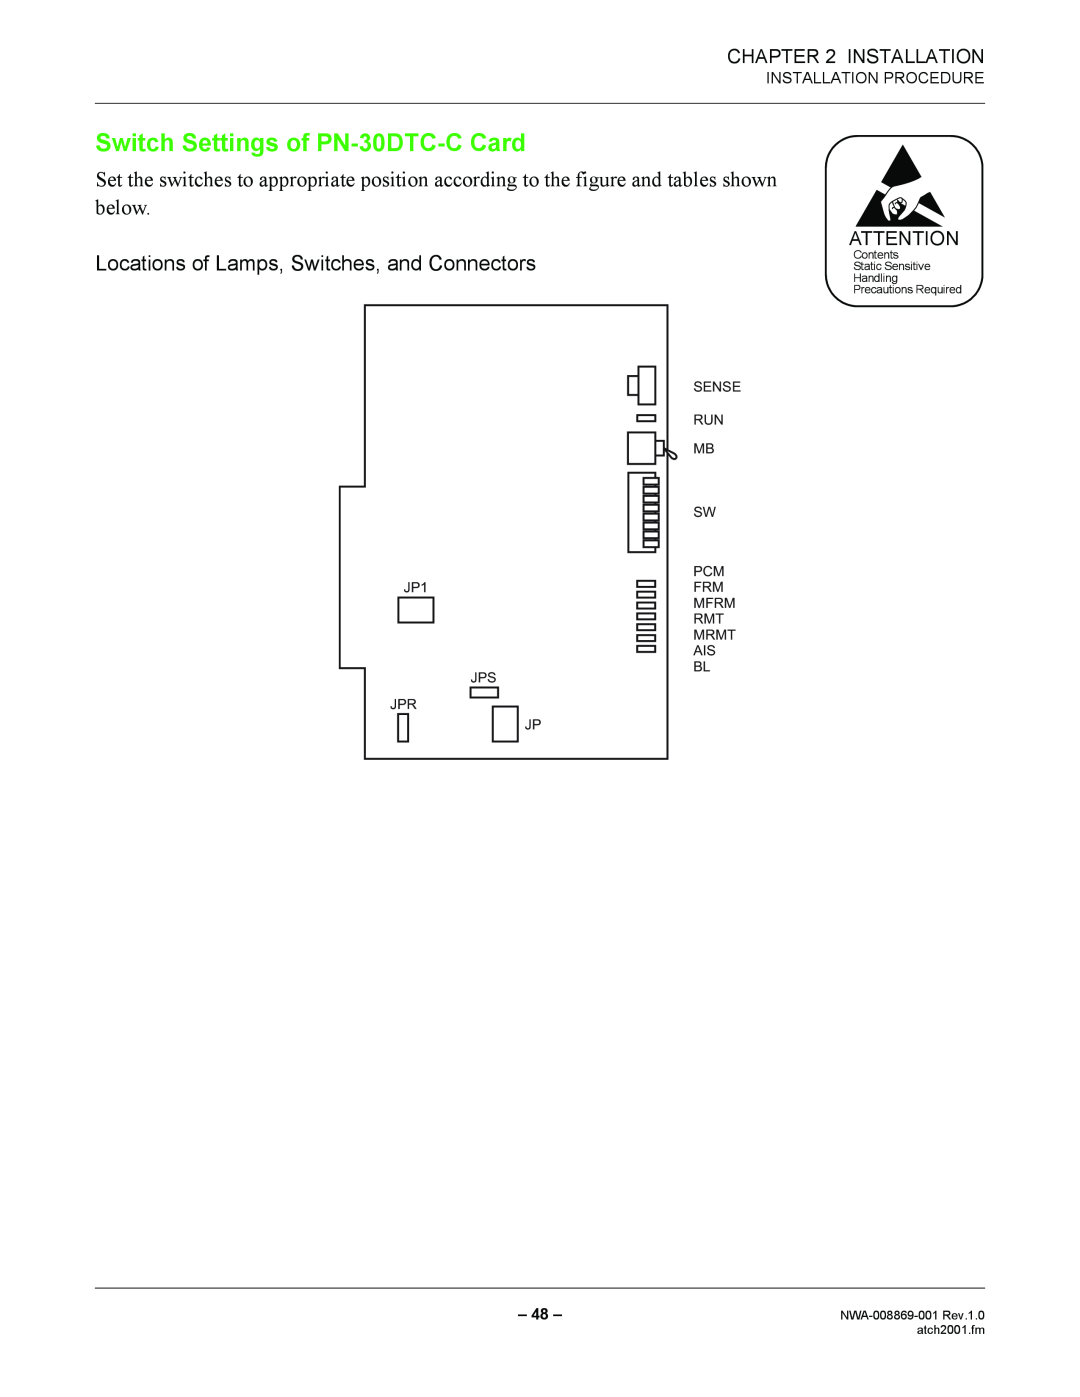 NEC manual Switch Settings of PN-30DTC-C Card, Installation Procedure, NWA-008869-001 Rev.1.0 